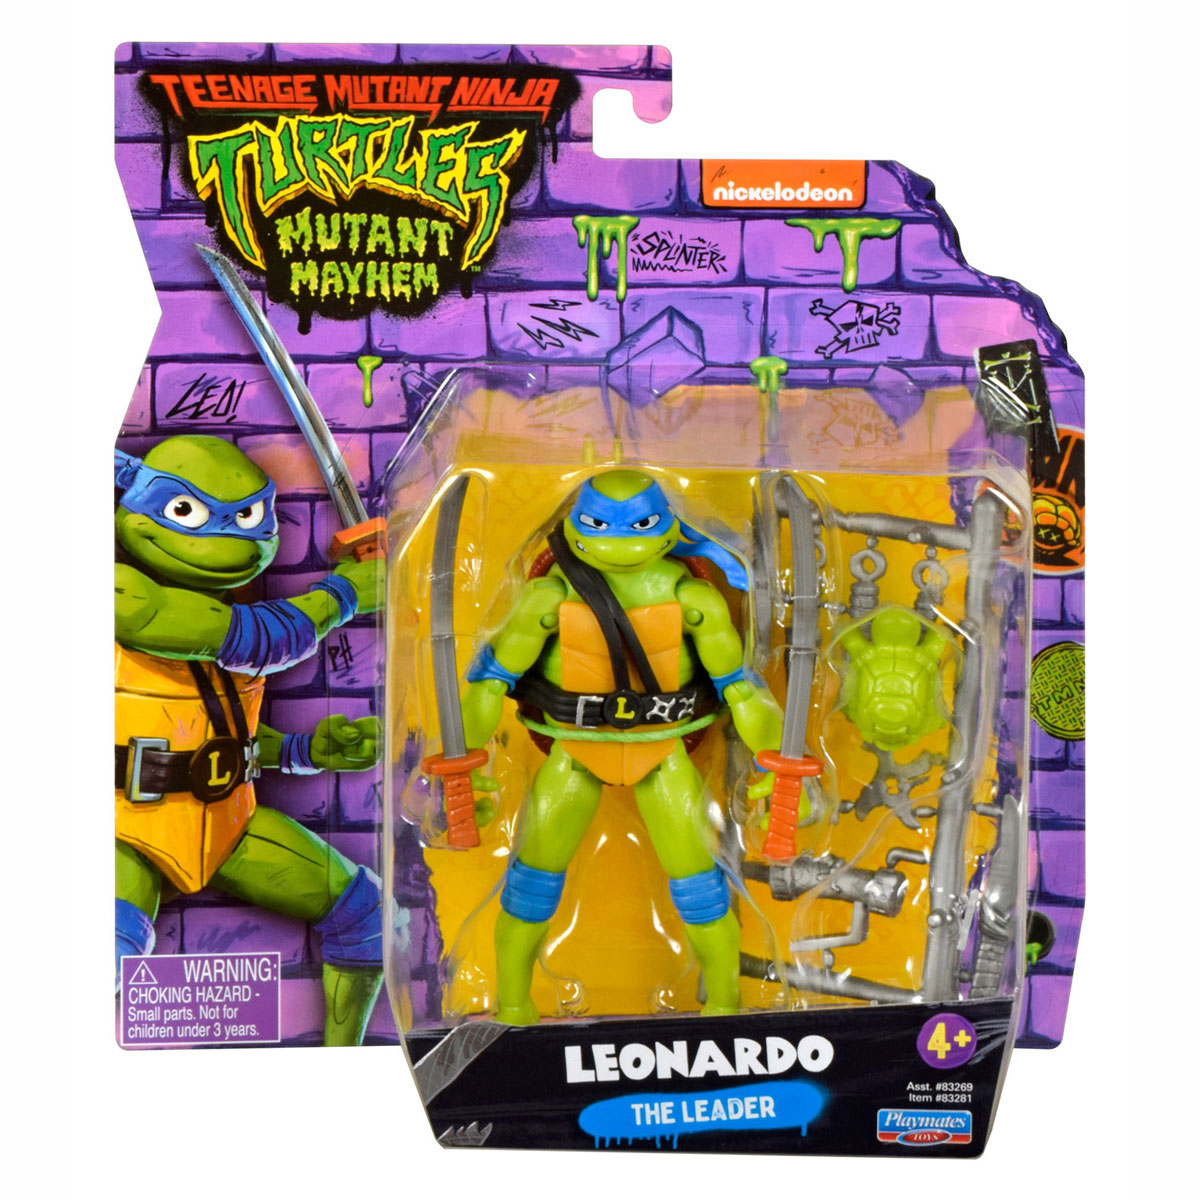 4Pcs Teenage Mutant Ninja Turtles Mini Action Figures Toy Gifts Tmnt  Collection